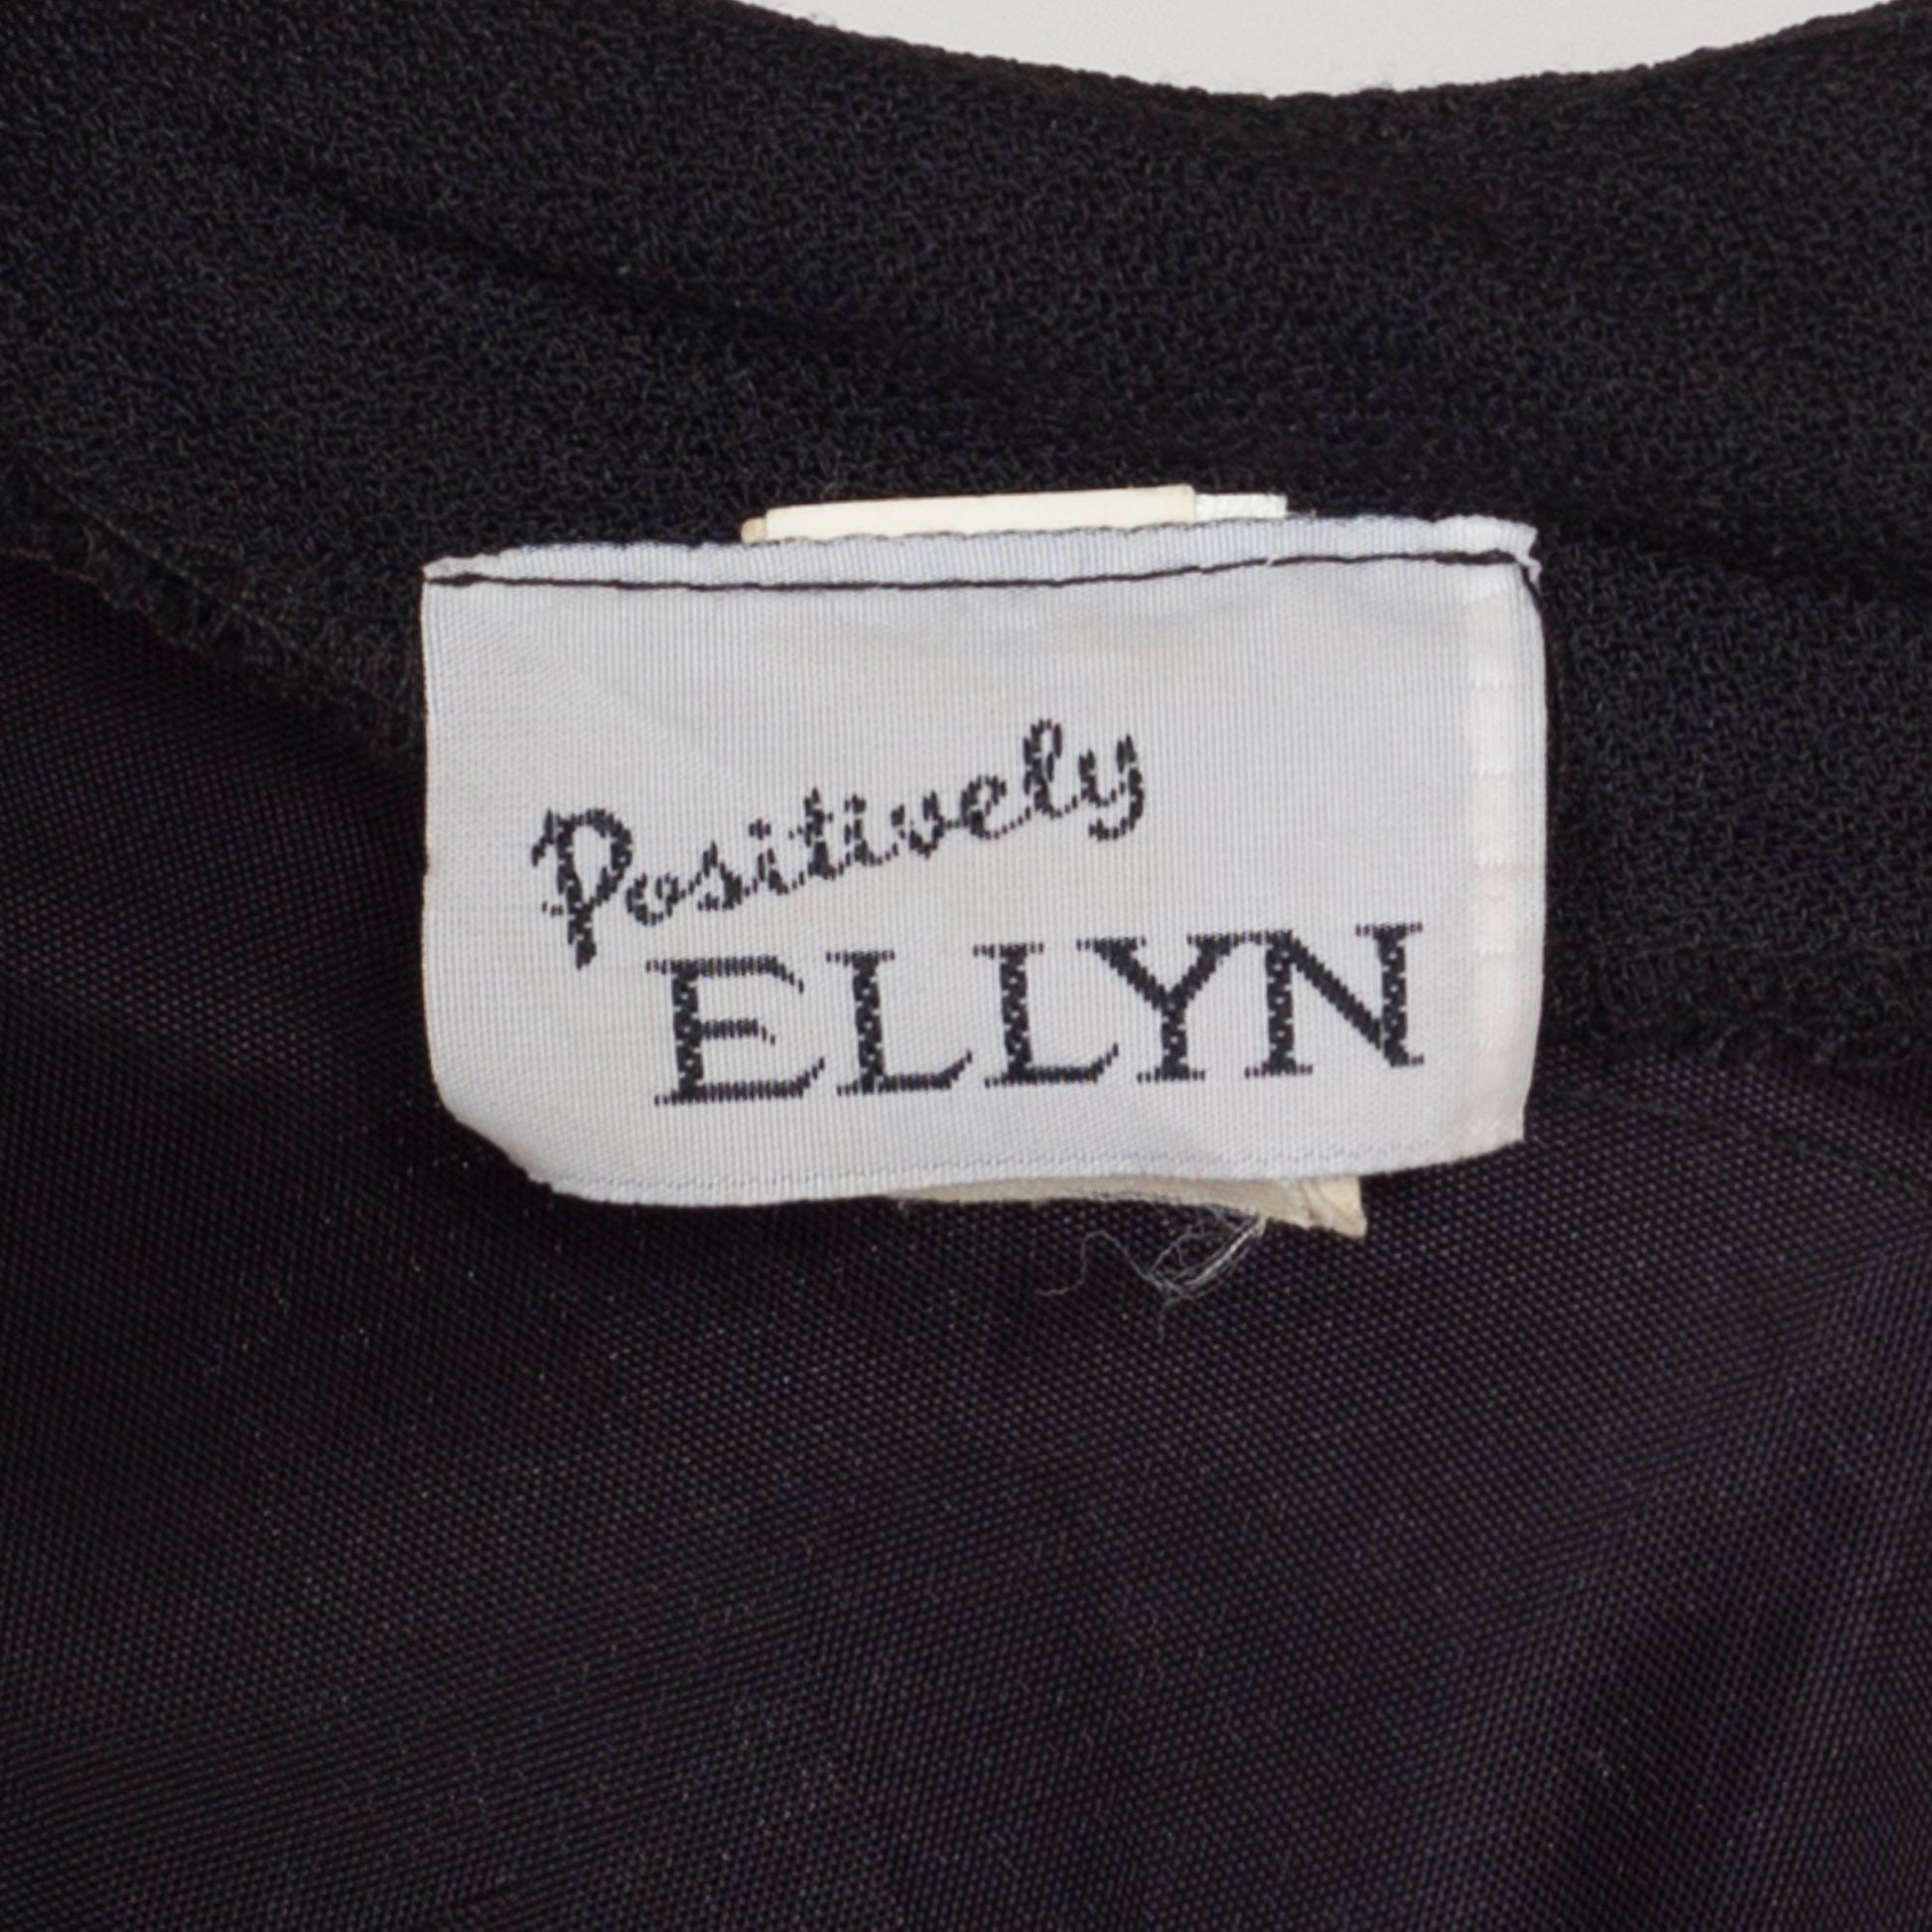 Medium 80s Black Sheer Sleeve Secretary Wrap Dress | Vintage Button Front Long Sleeve Mini Sheath Dress